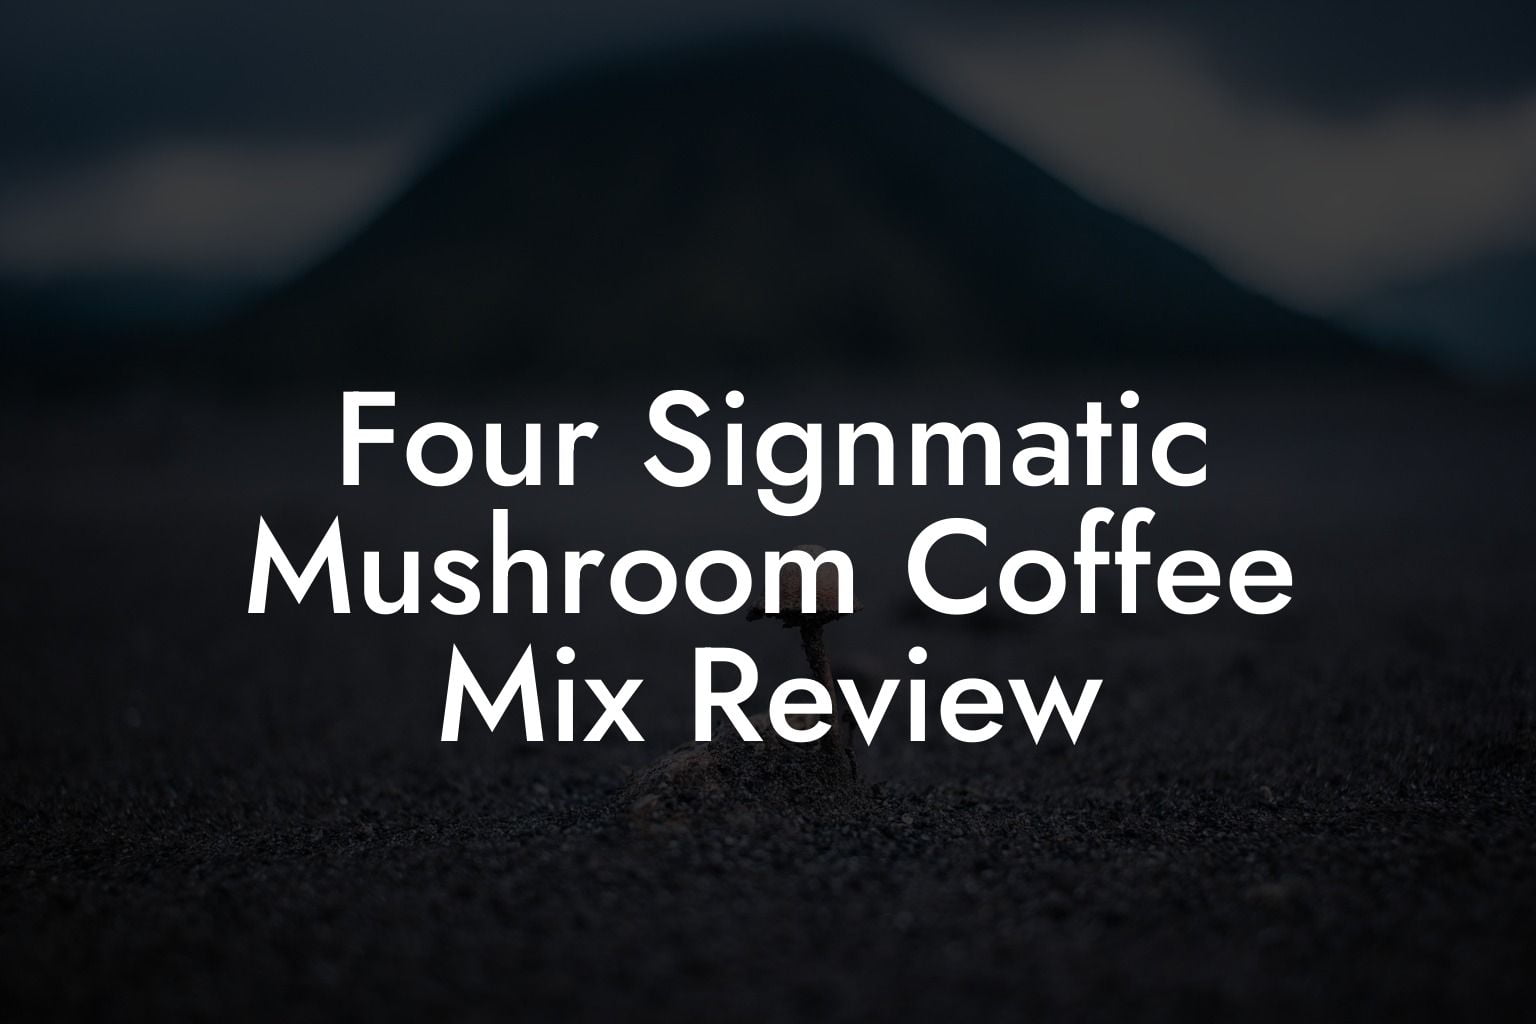 Four Signmatic Mushroom Coffee Mix Review